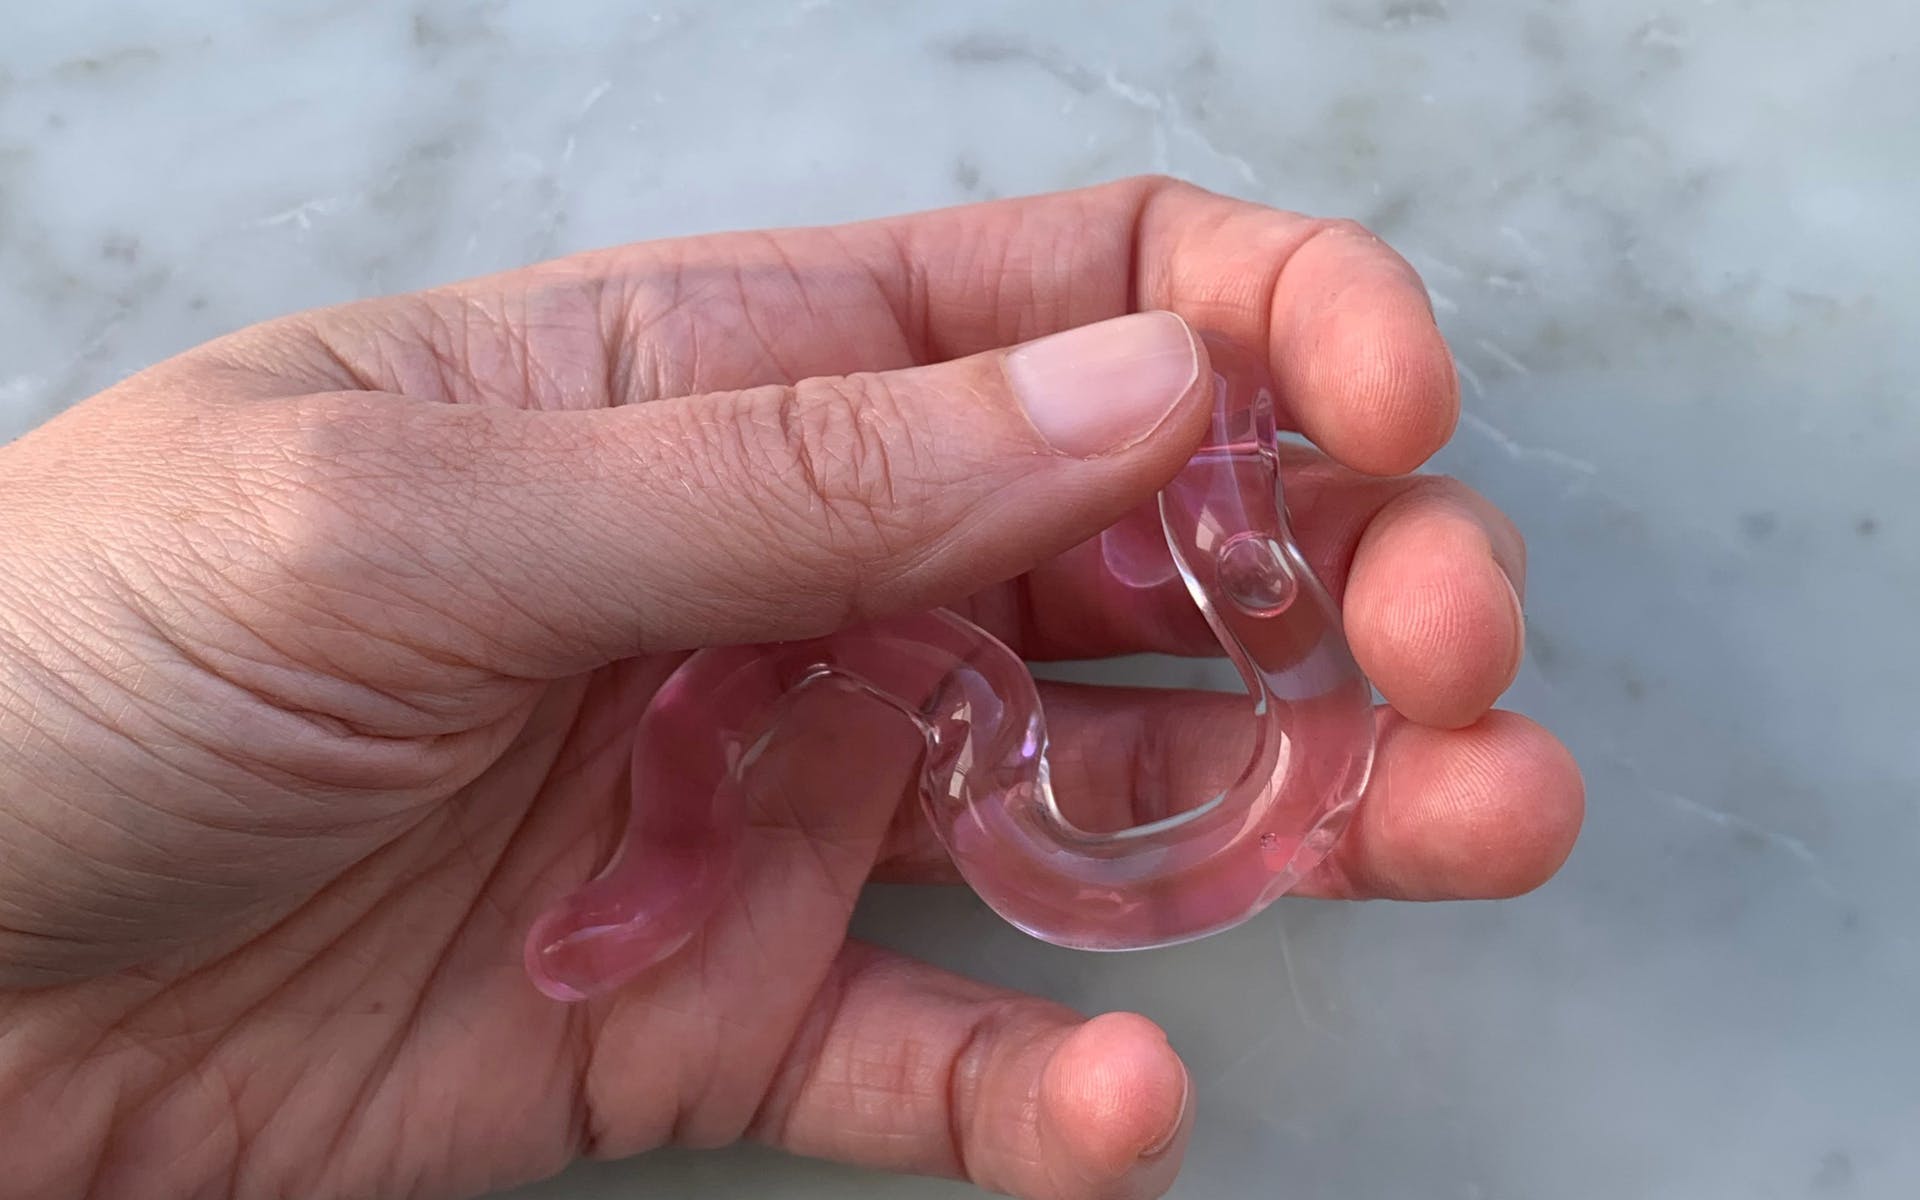 Hand holding pink glass tube-like object